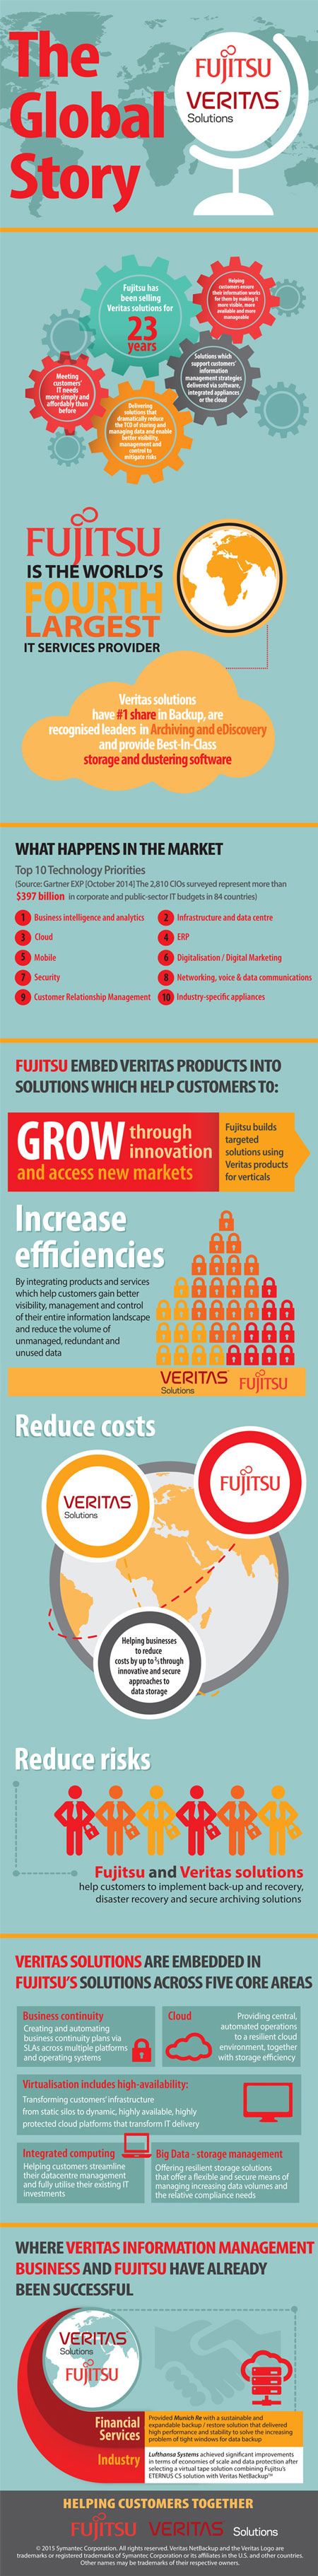 Fujitsu Veritas trade marketing infographic